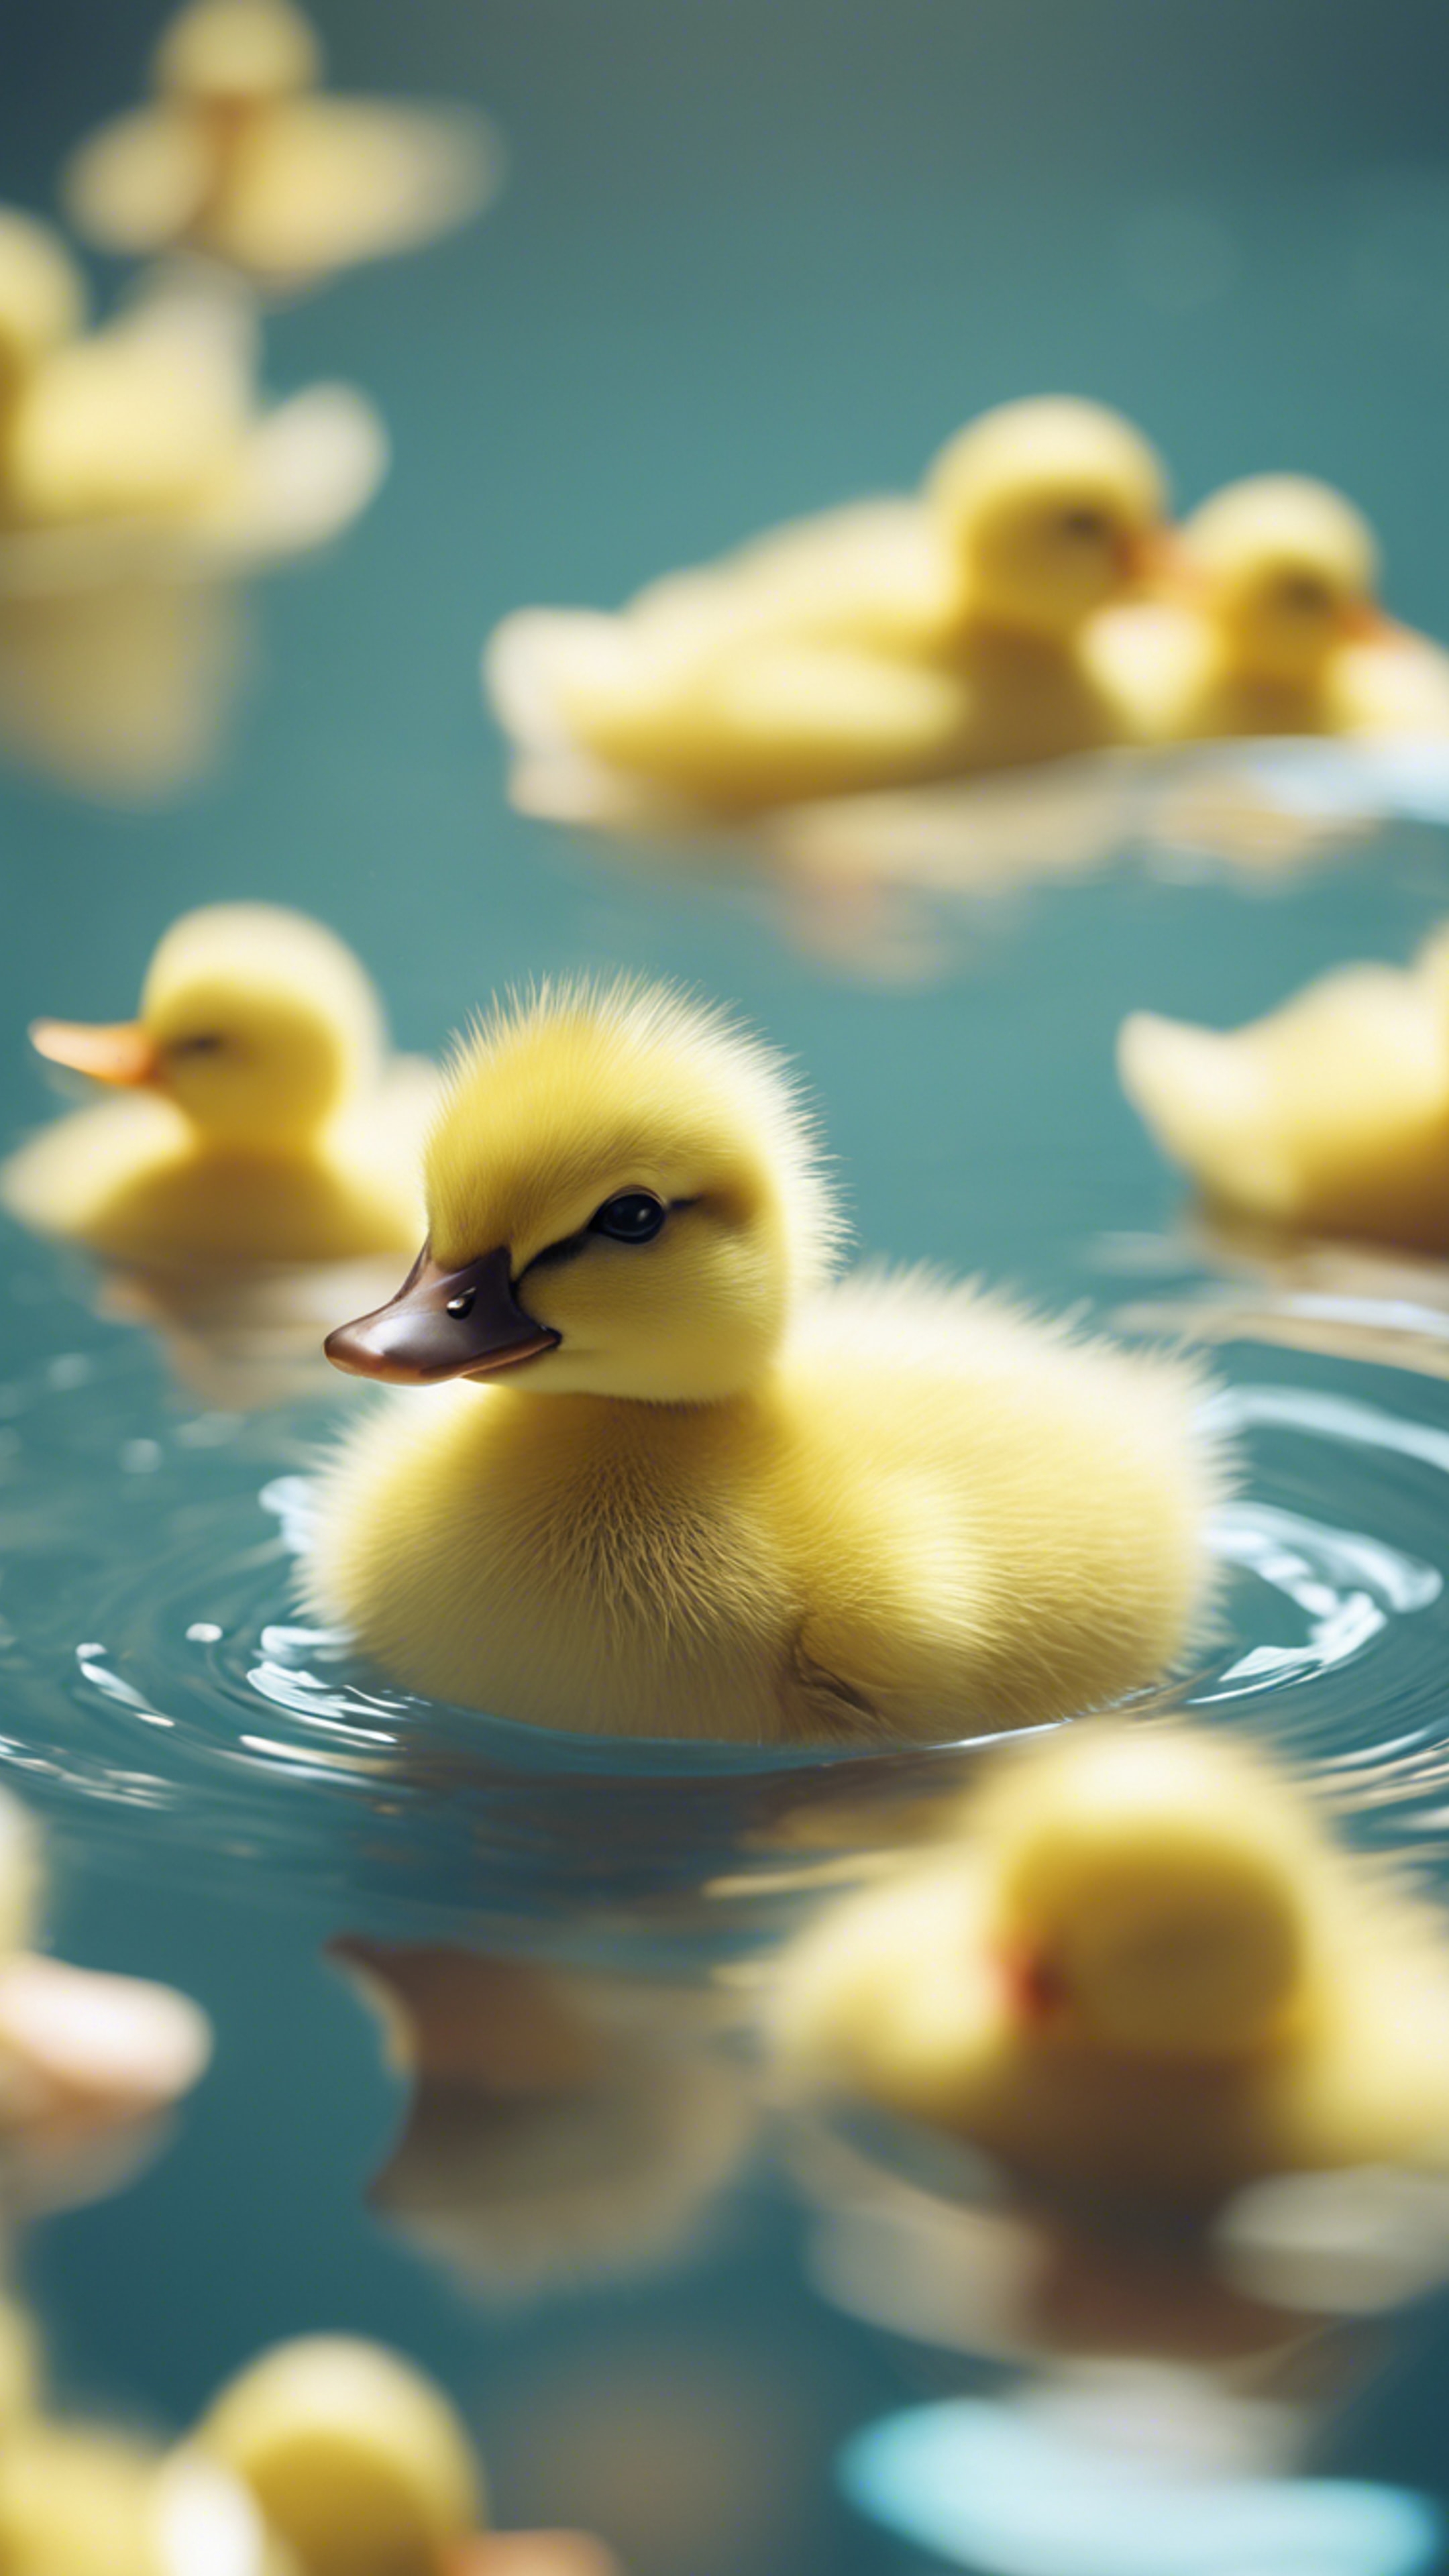 A small, chubby, kawaii yellow duckling swimming in a pastel blue pond. Fondo de pantalla[2b07b187d2cc4e759cc9]